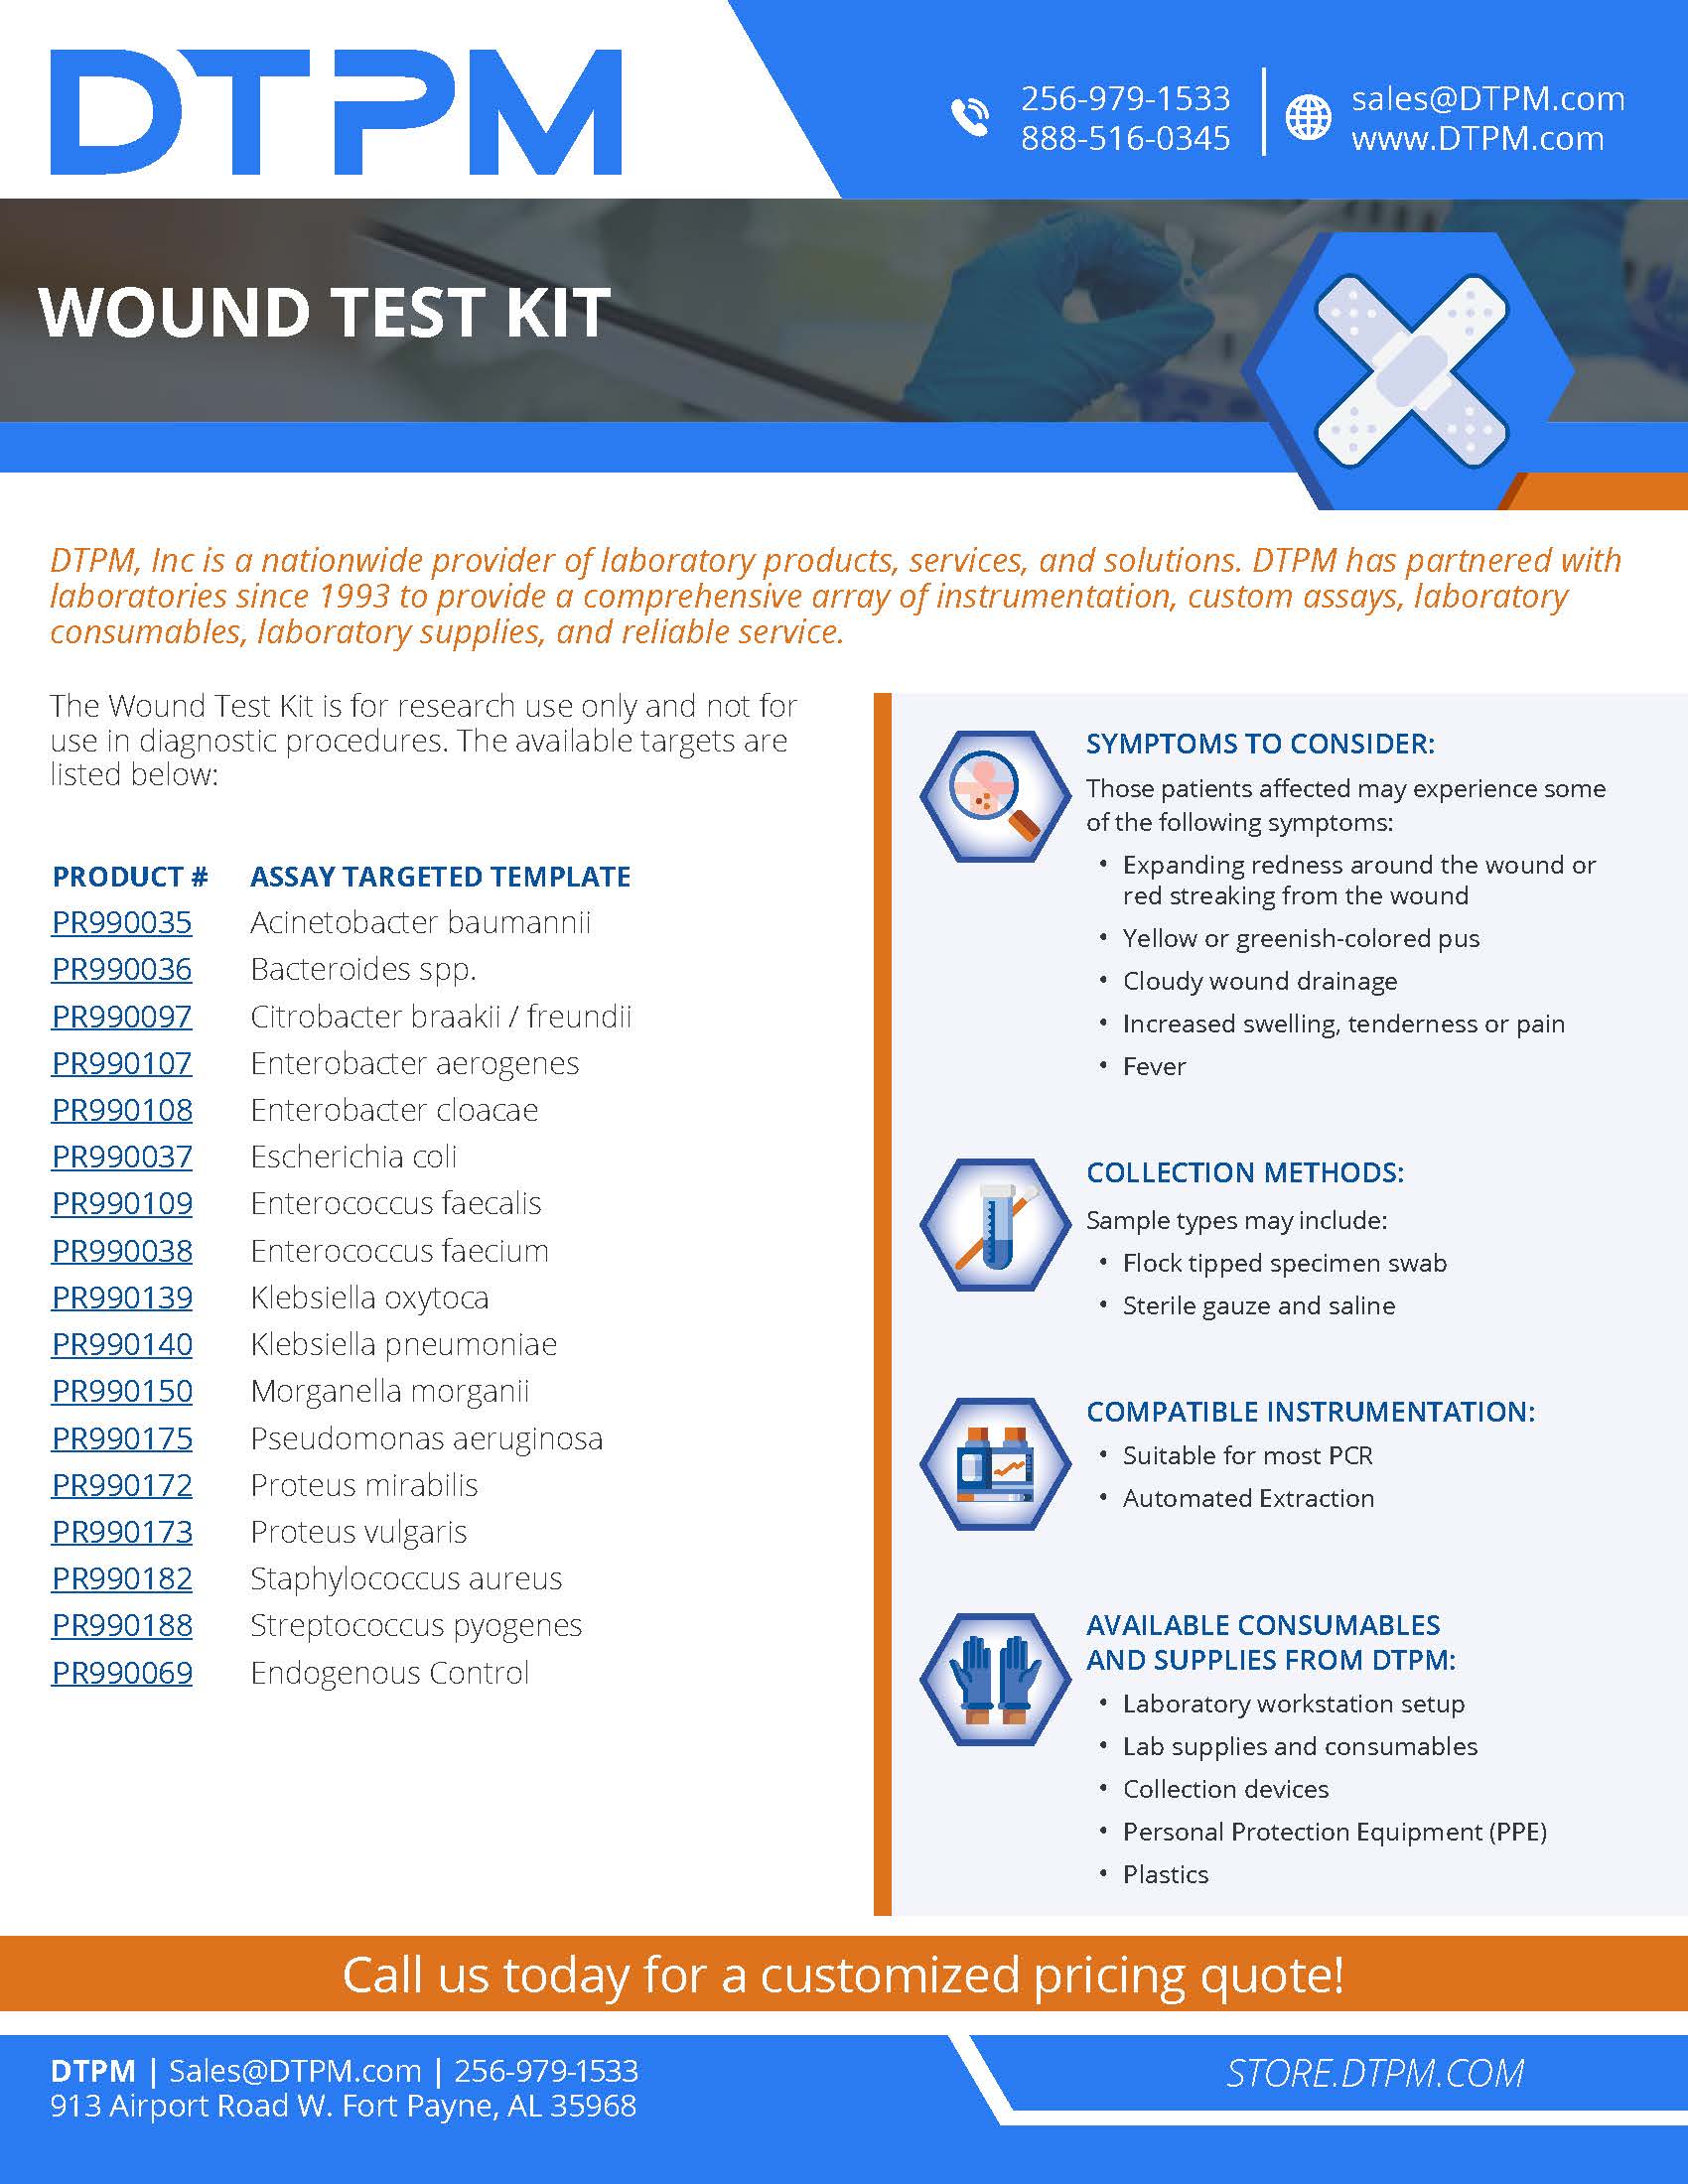 DTPM Wound Test Kit